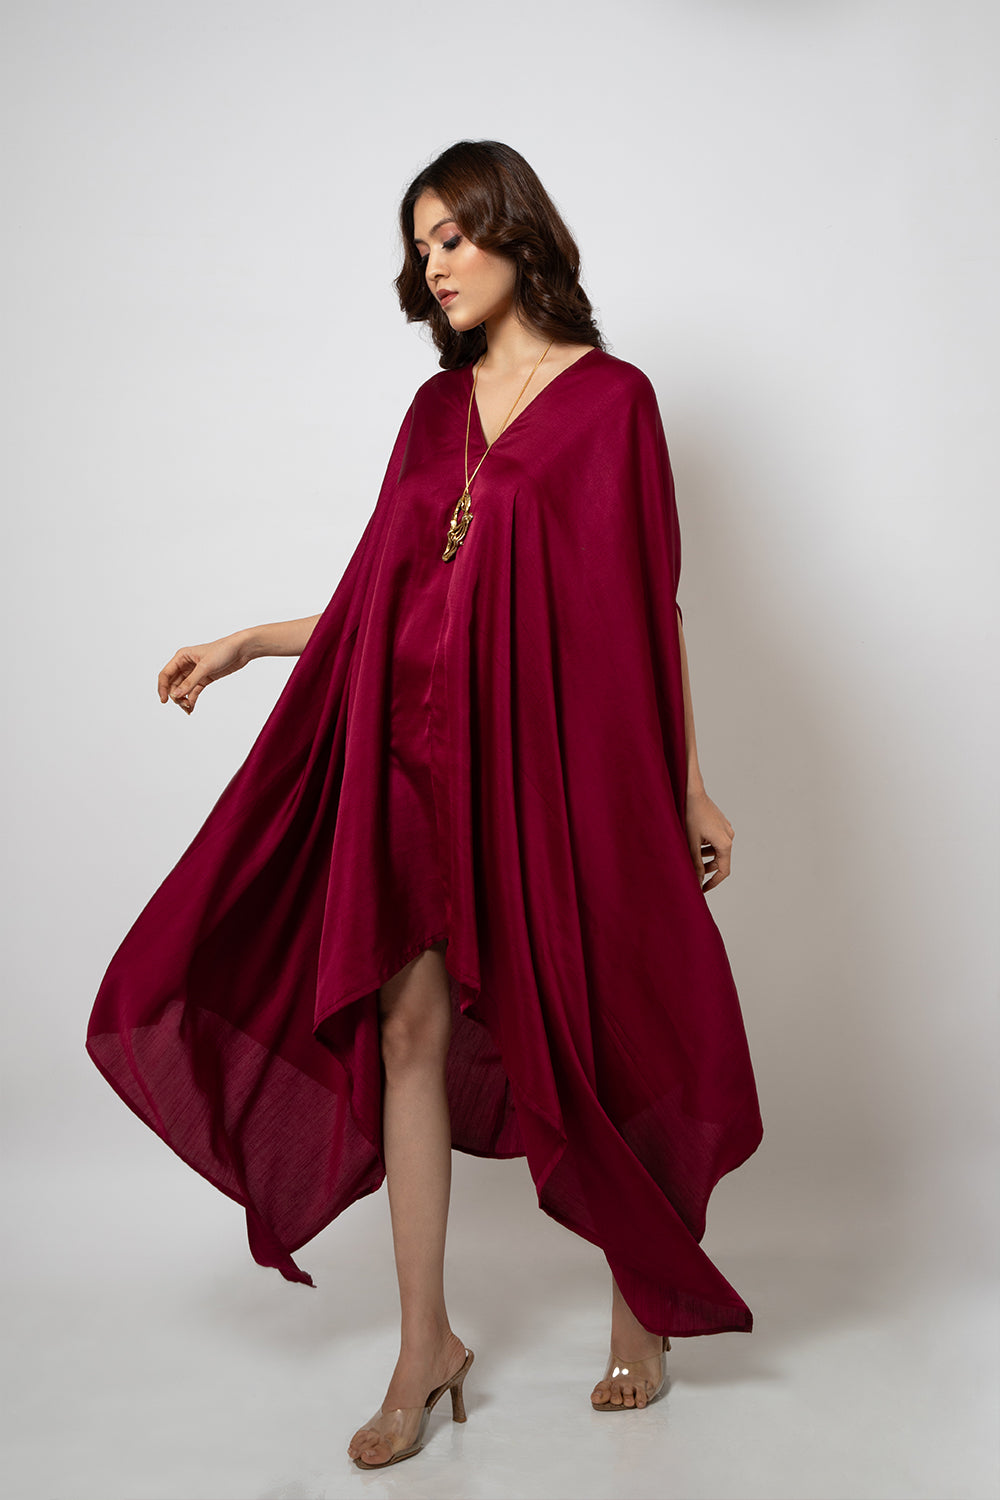 6. A Burgandy zero waste silk blend dress